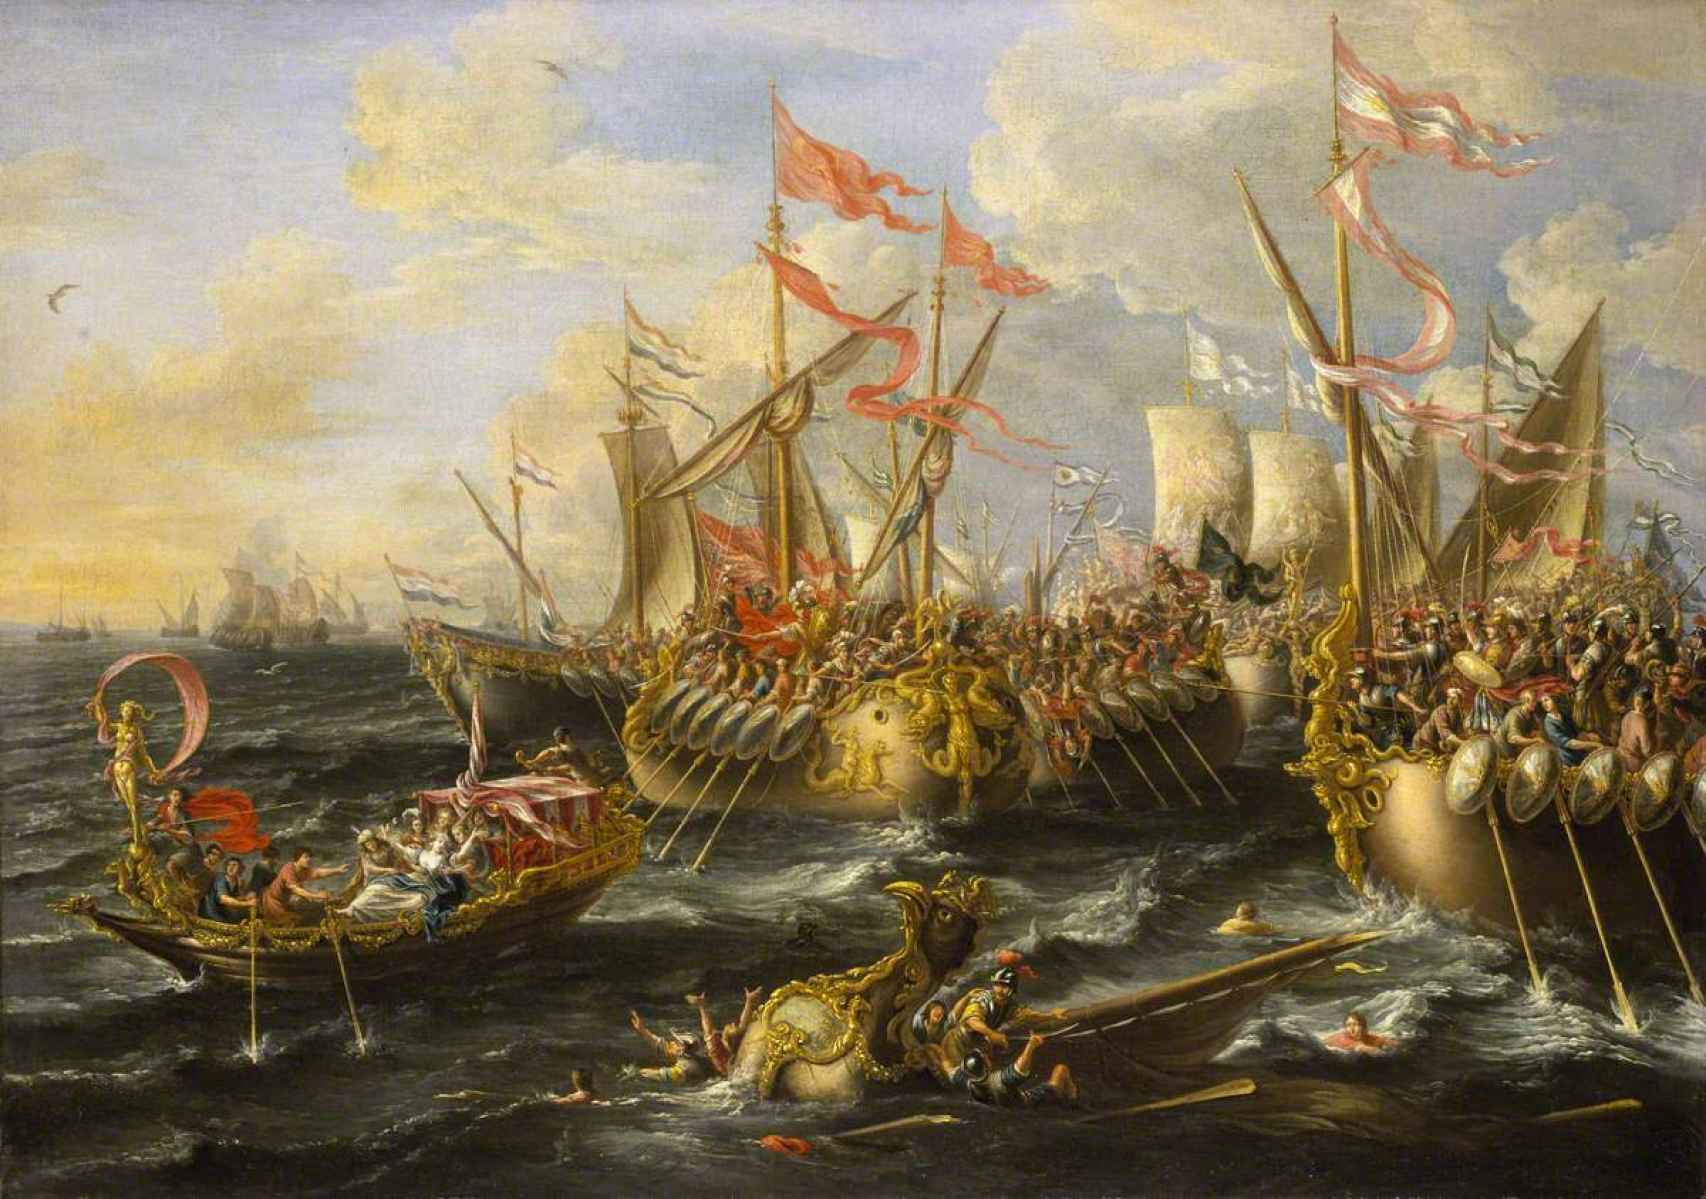 Lienzo de la batalla de Actium a cargo de Lorenzo a Castro.